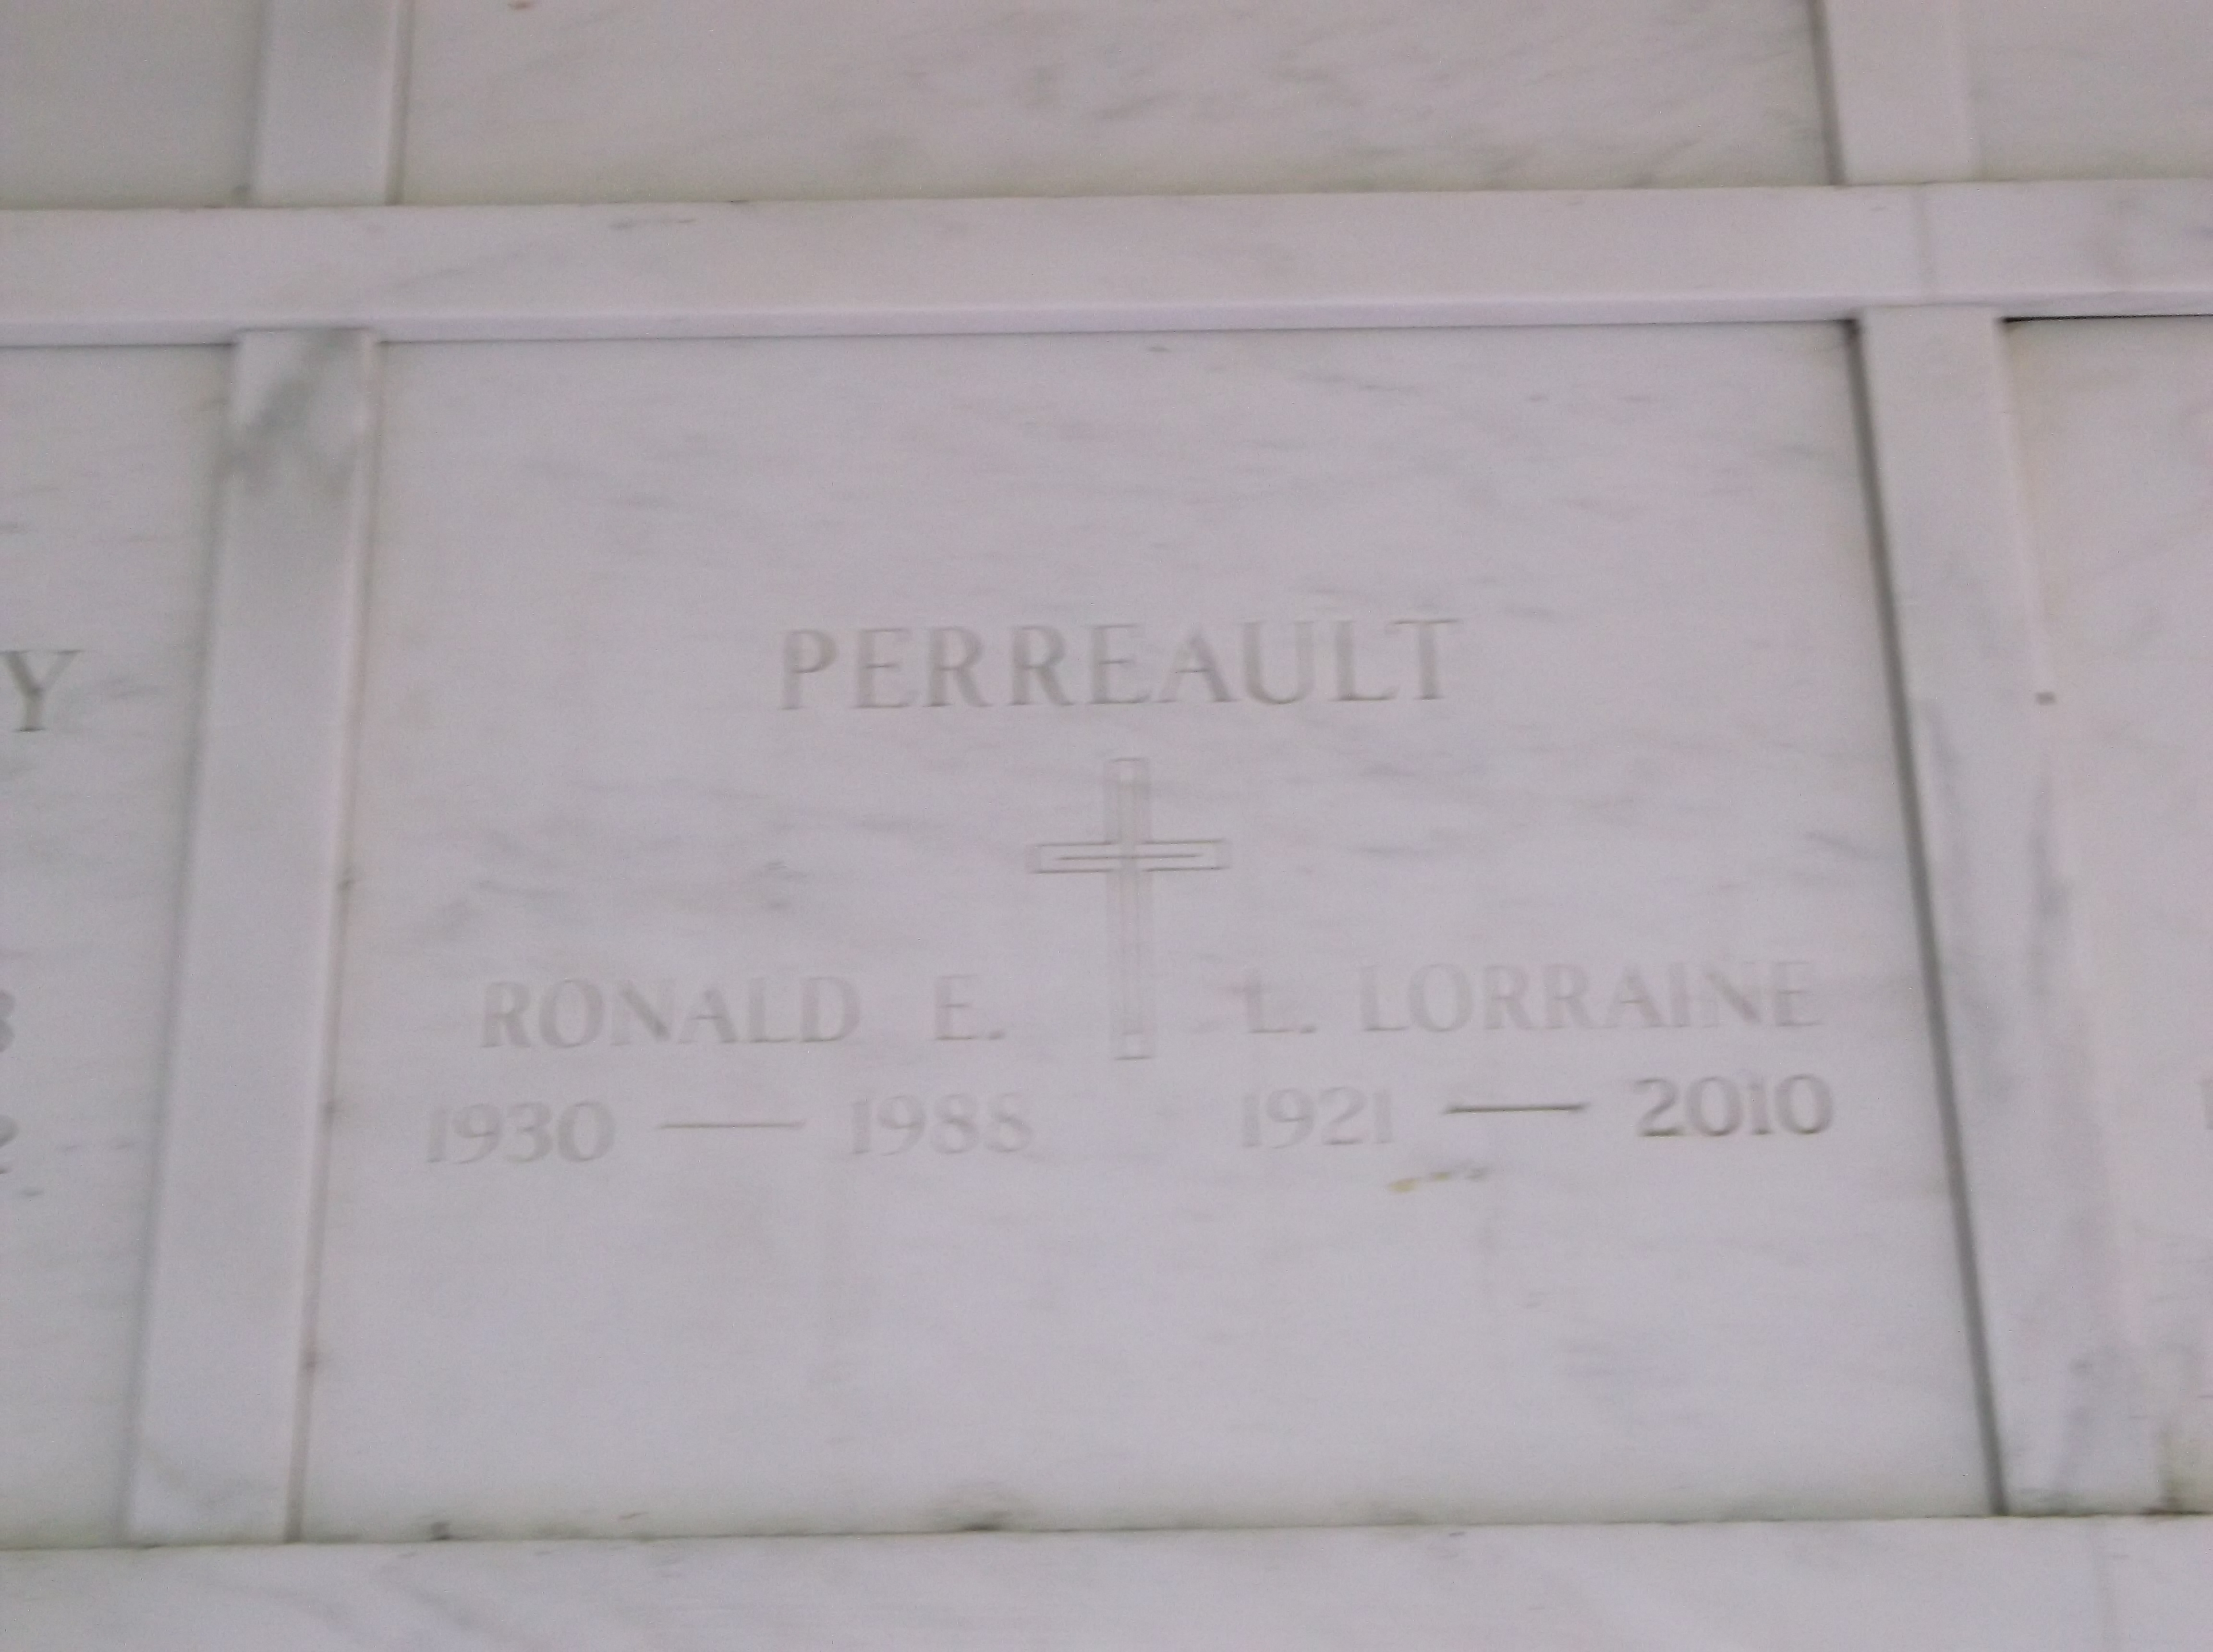 Ronald E Perreault